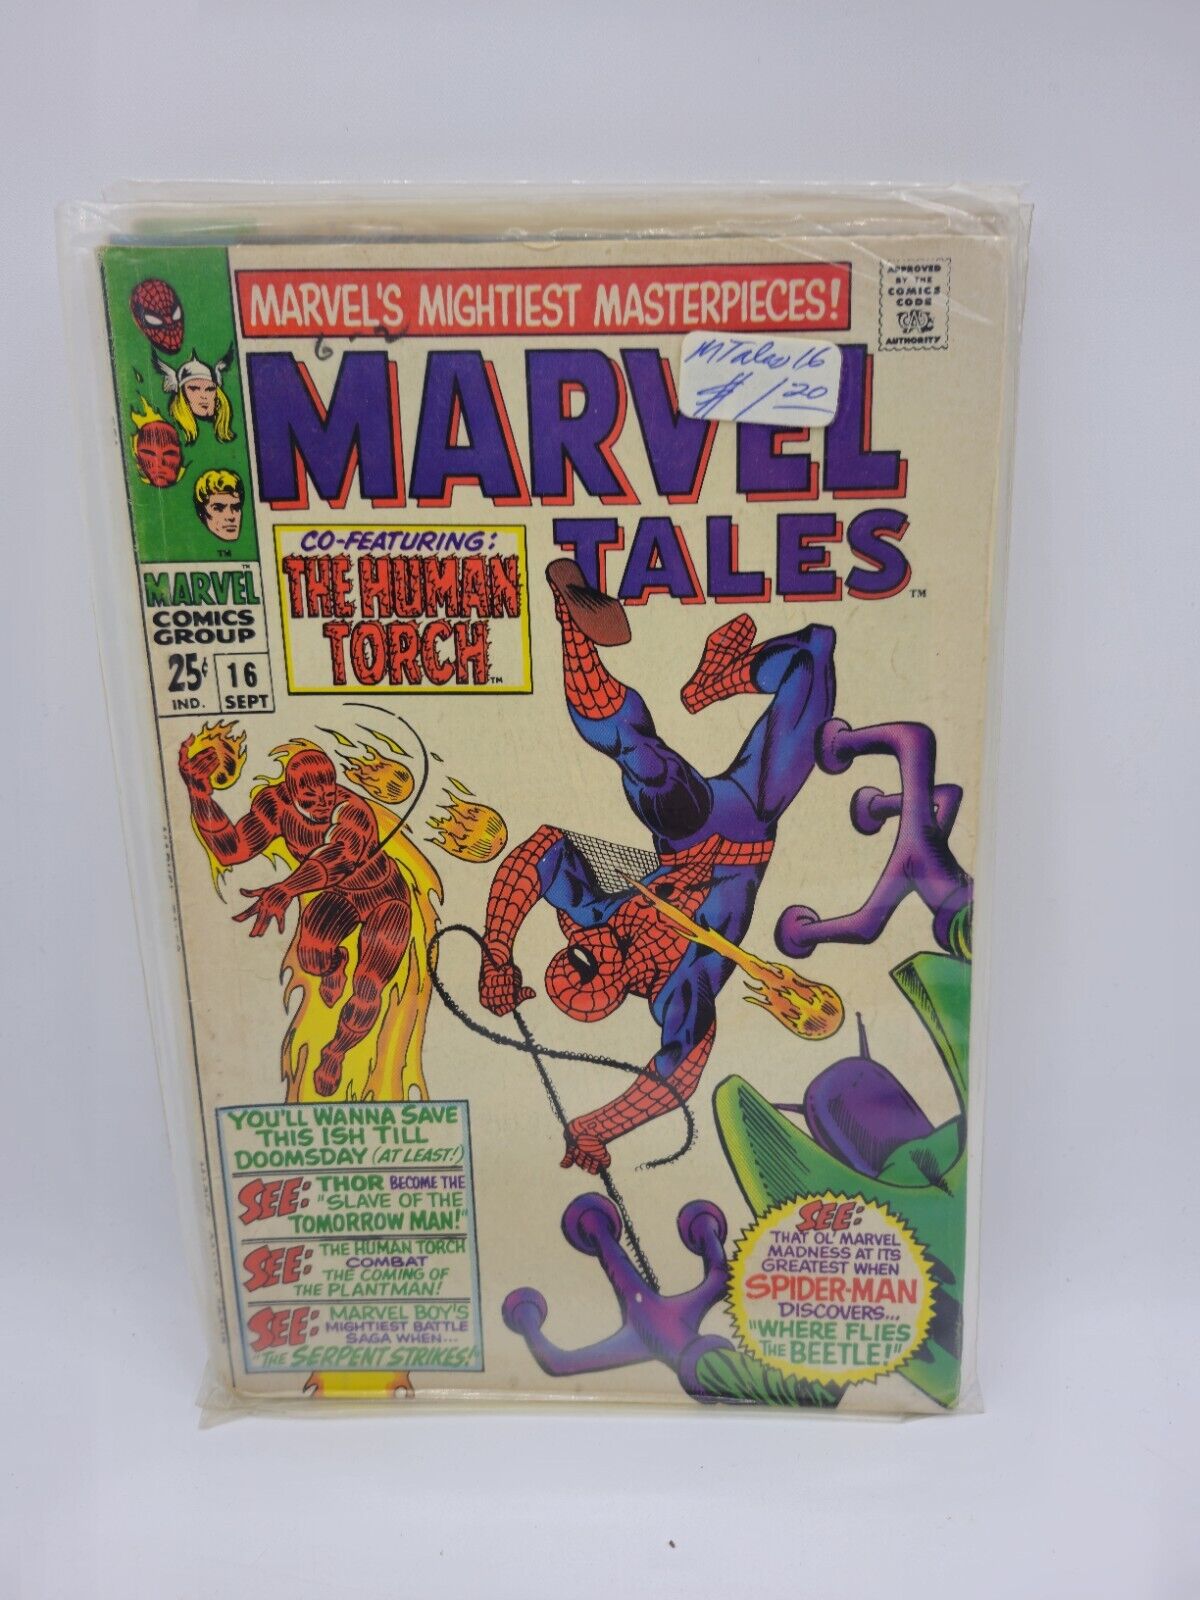 MARVEL TALES #16 (1968) Spider-Man, Human Torch, Thor, Beetle, Steve Ditko